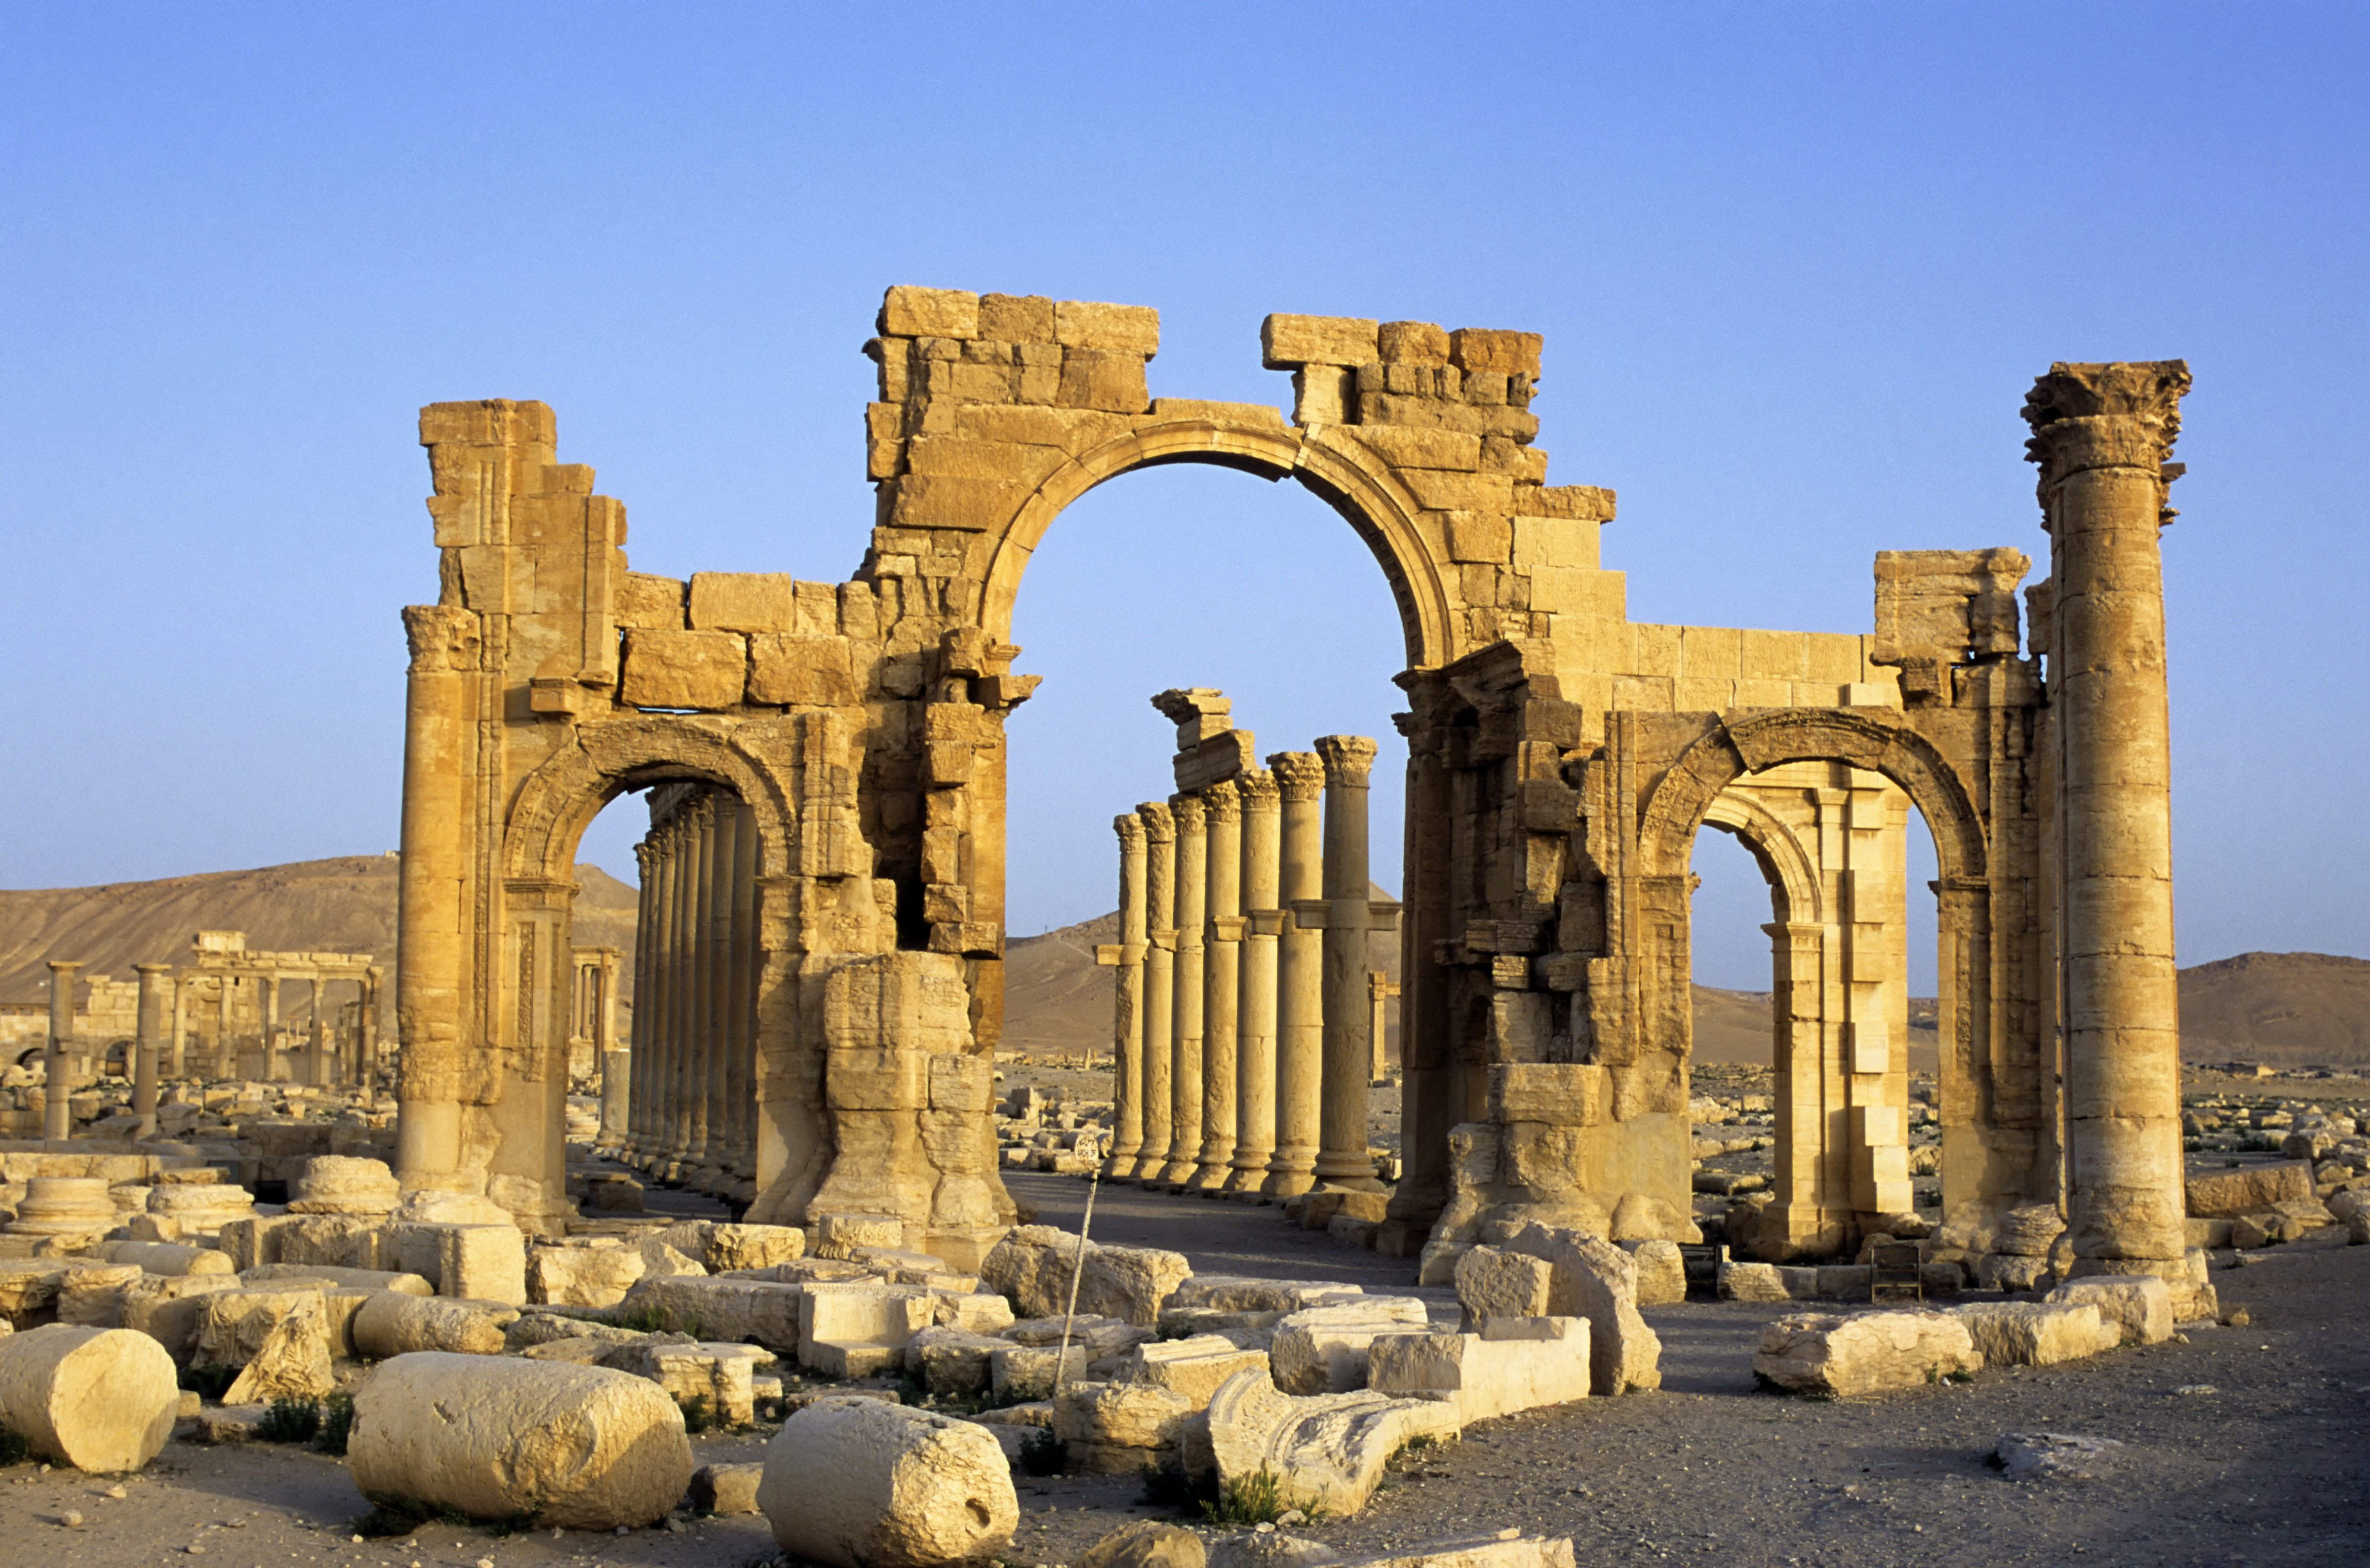 Syria, Palmyra, Ancient Roman City, Triumphal Arch And